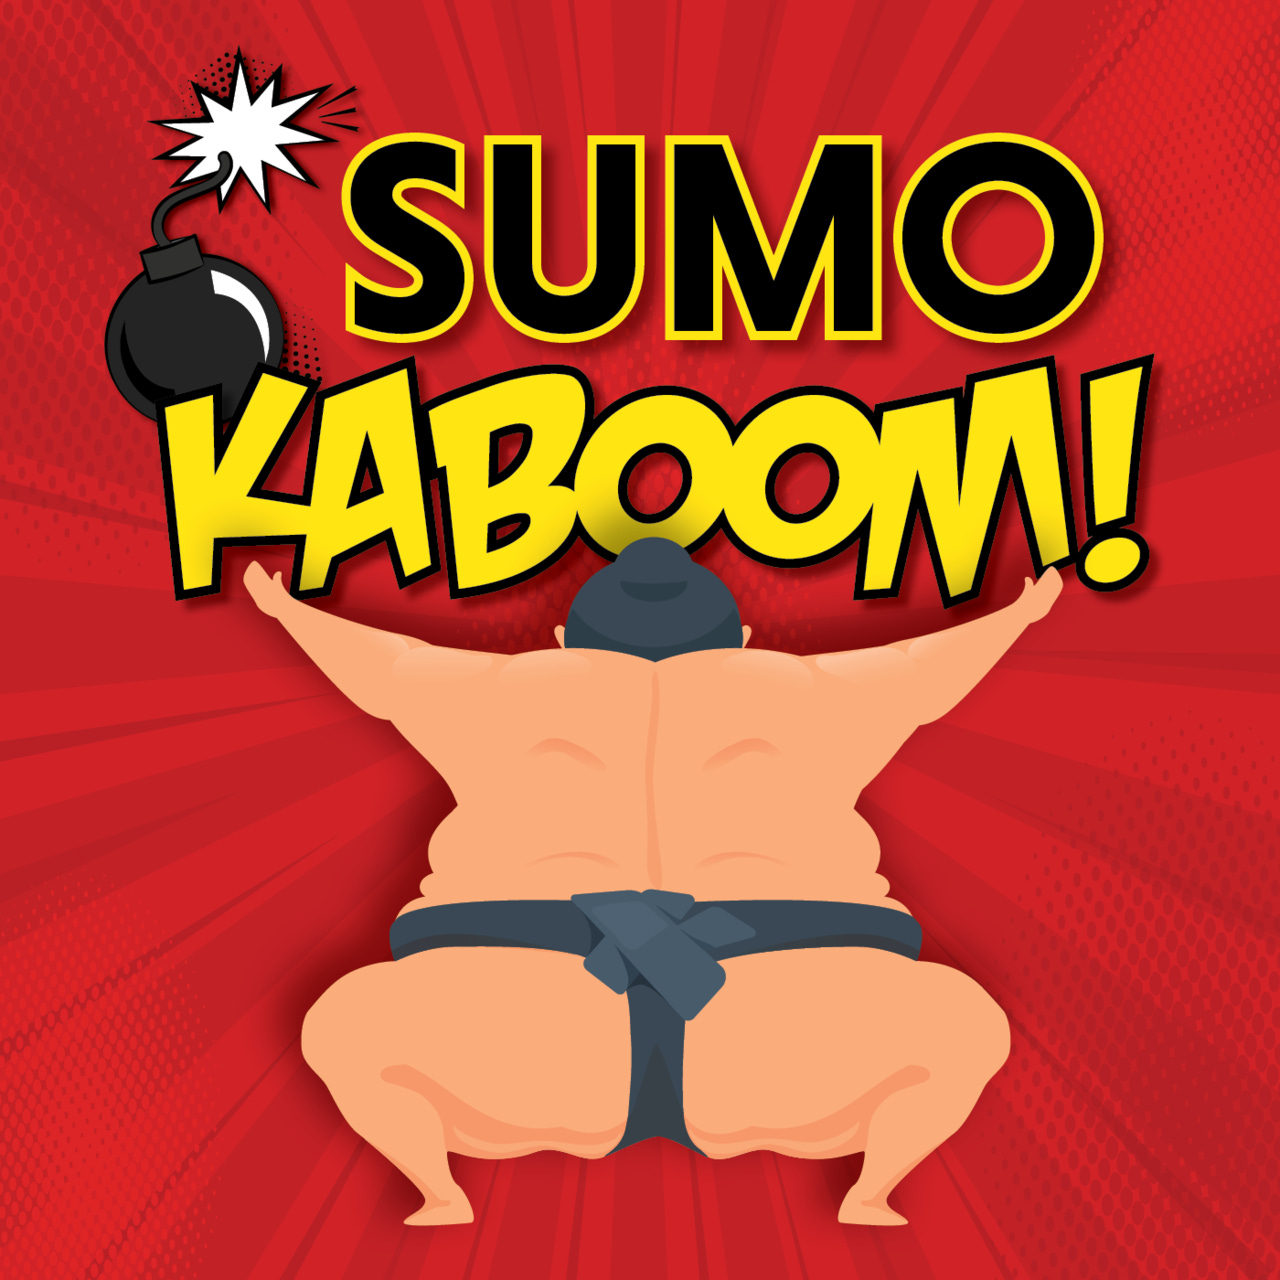 Artwork for Sumo Kaboom